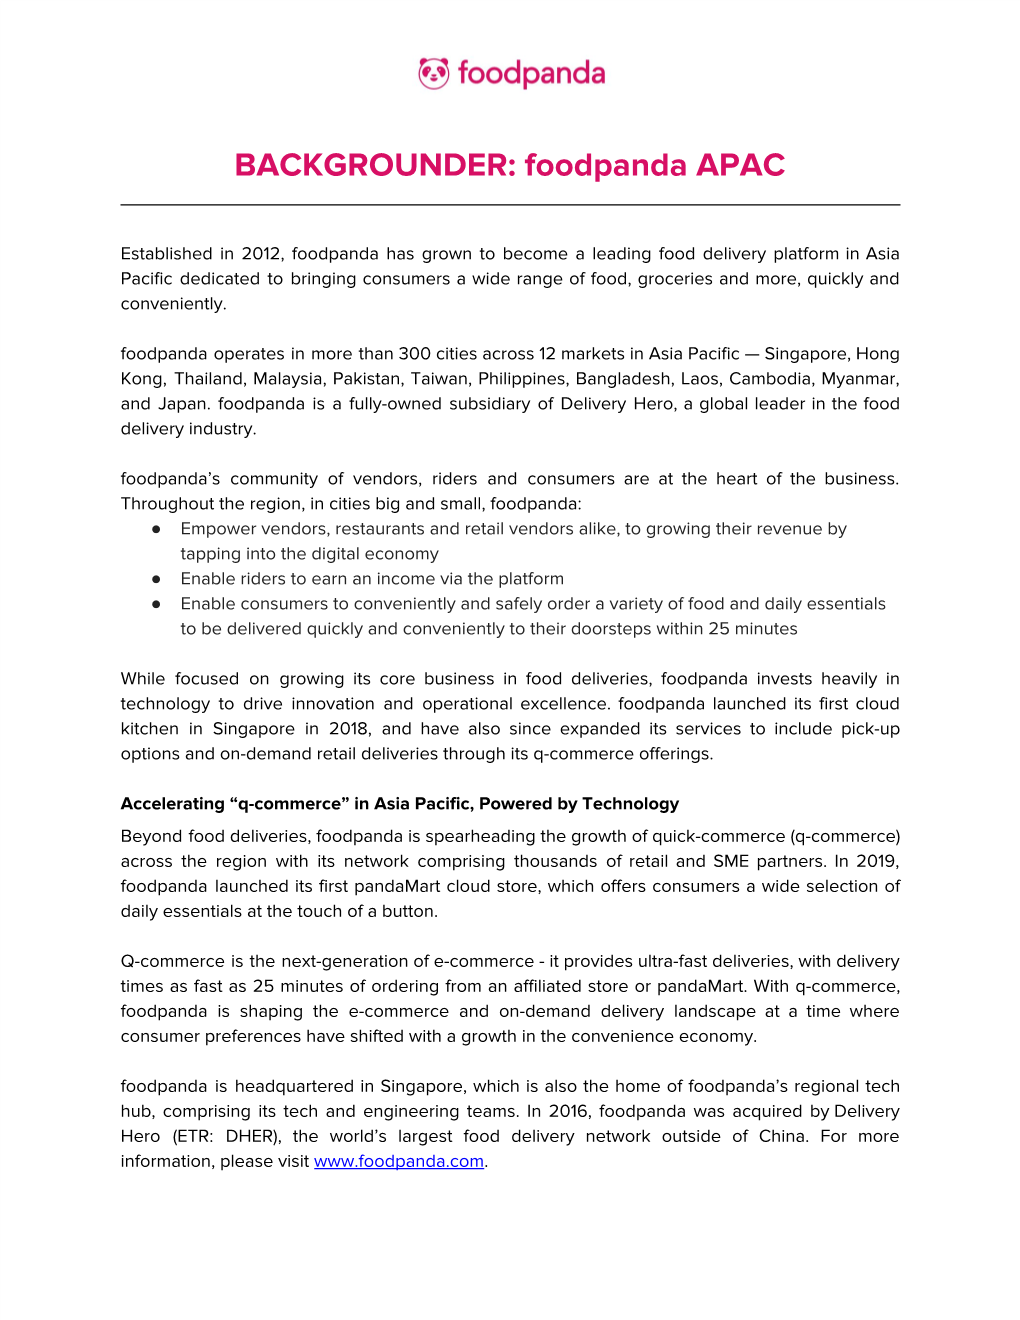 BACKGROUNDER: Foodpanda APAC